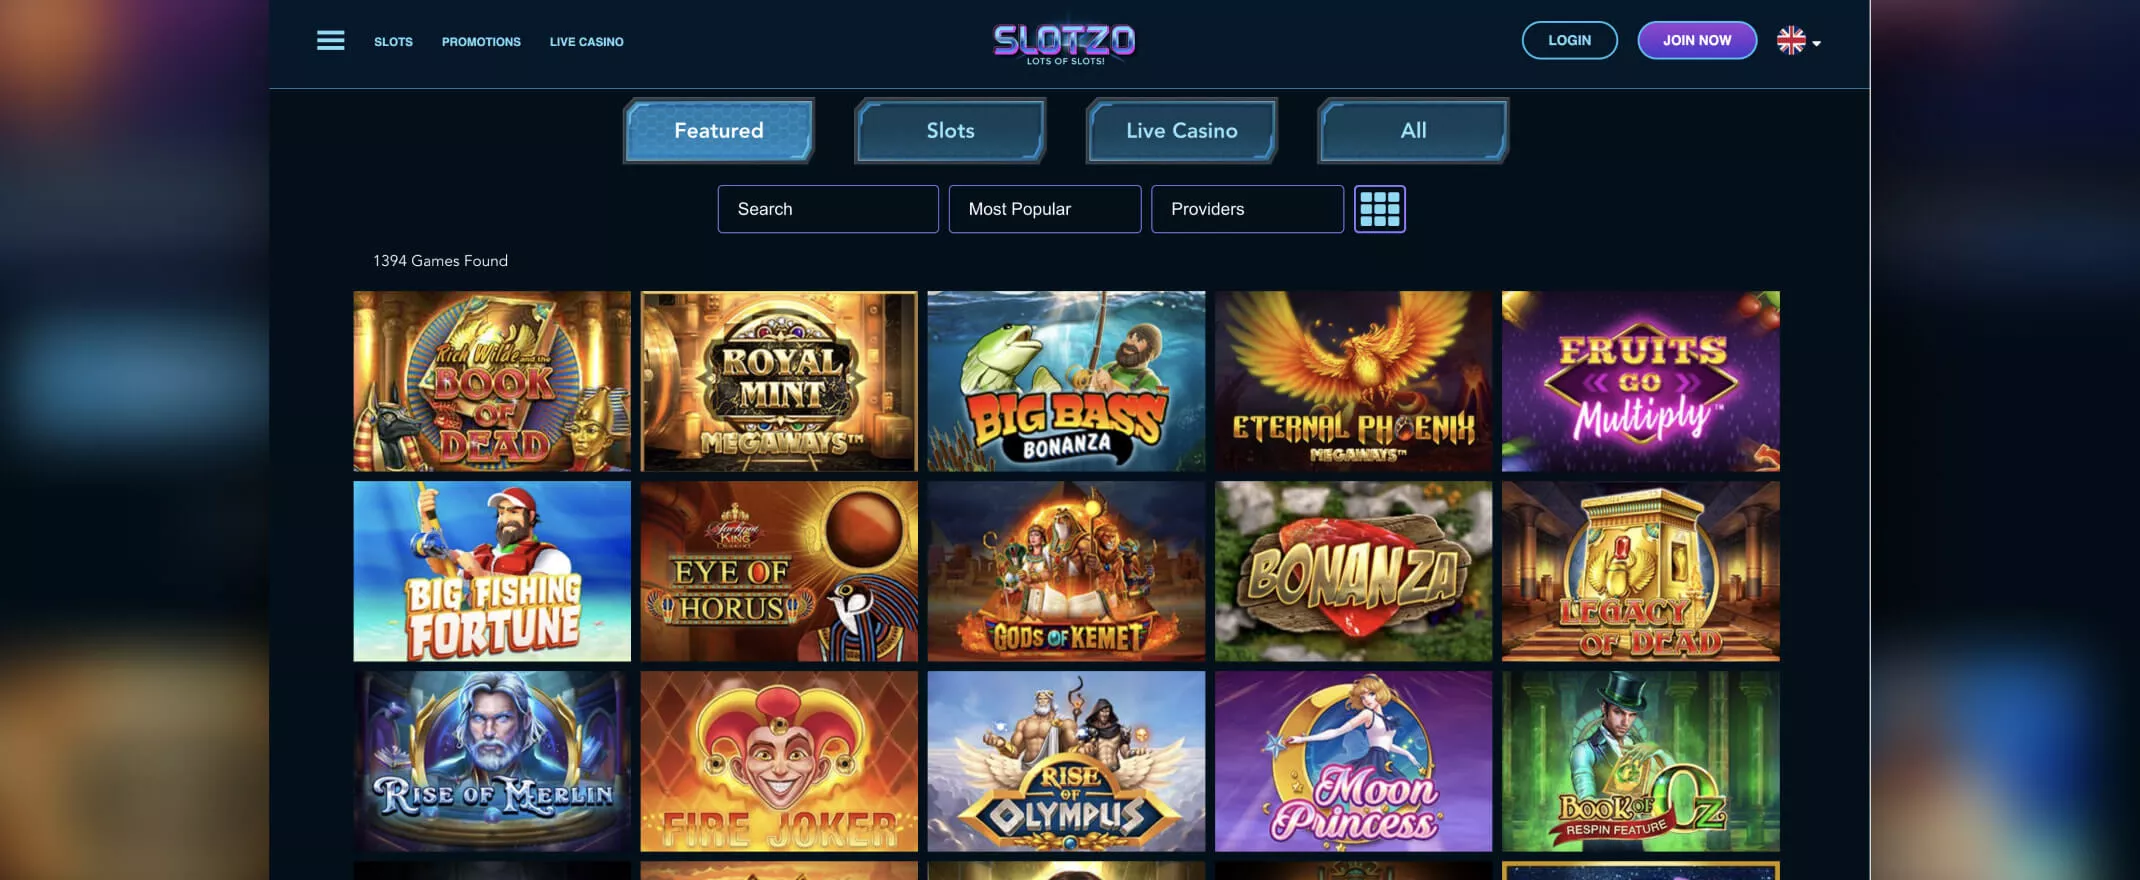 Slotzo casino screenshot of games